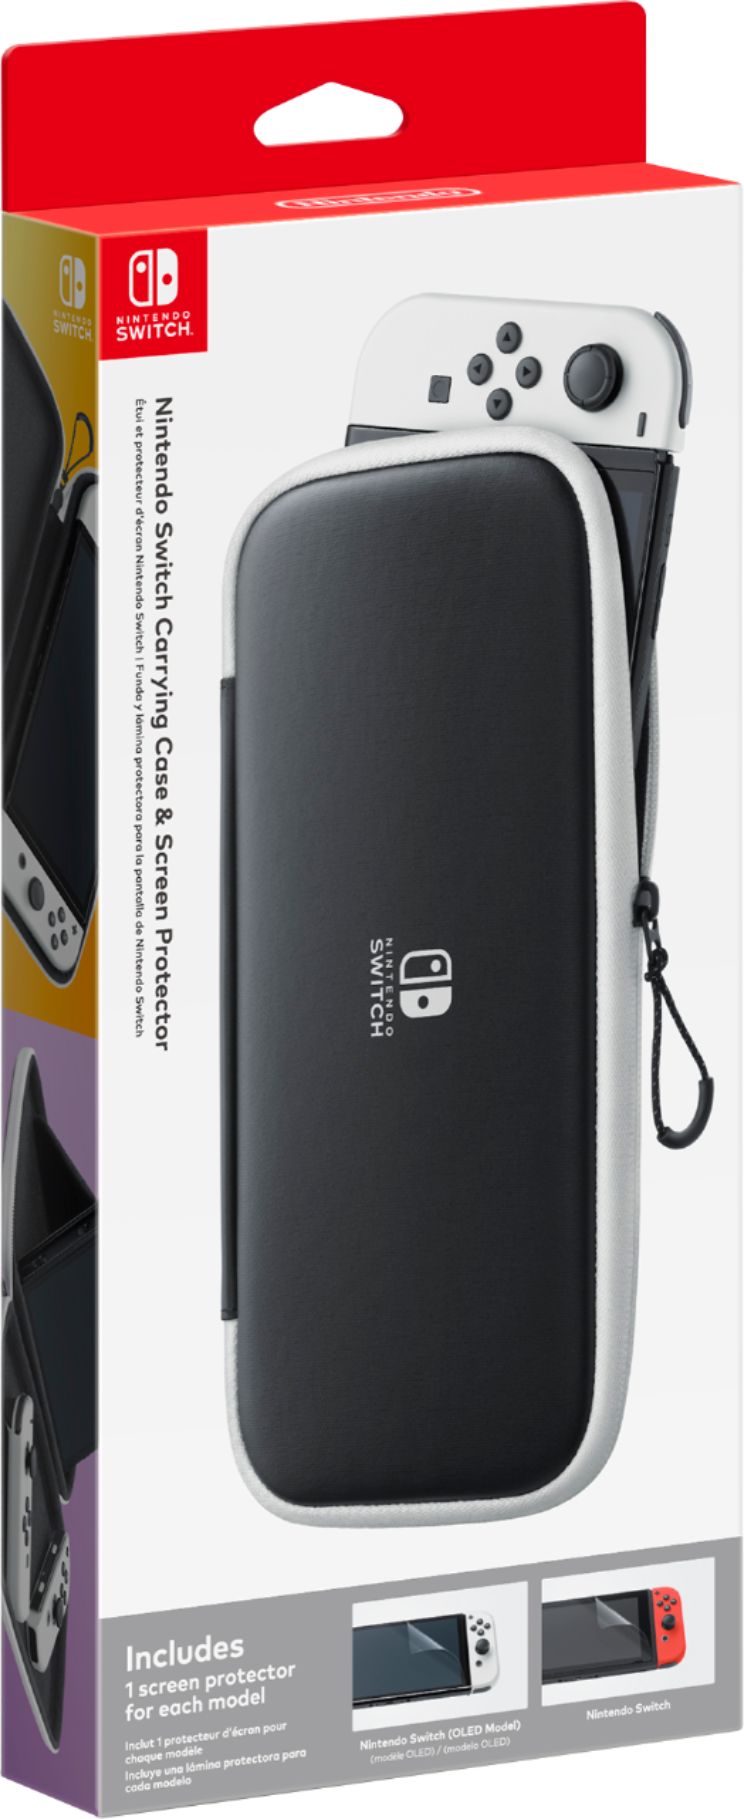 Switch OLED - Funda protectora para Nintendo Switch OLED modelo 2021,  compatible con Switch OLED y Joy-Con Controller Grip Case con protector de